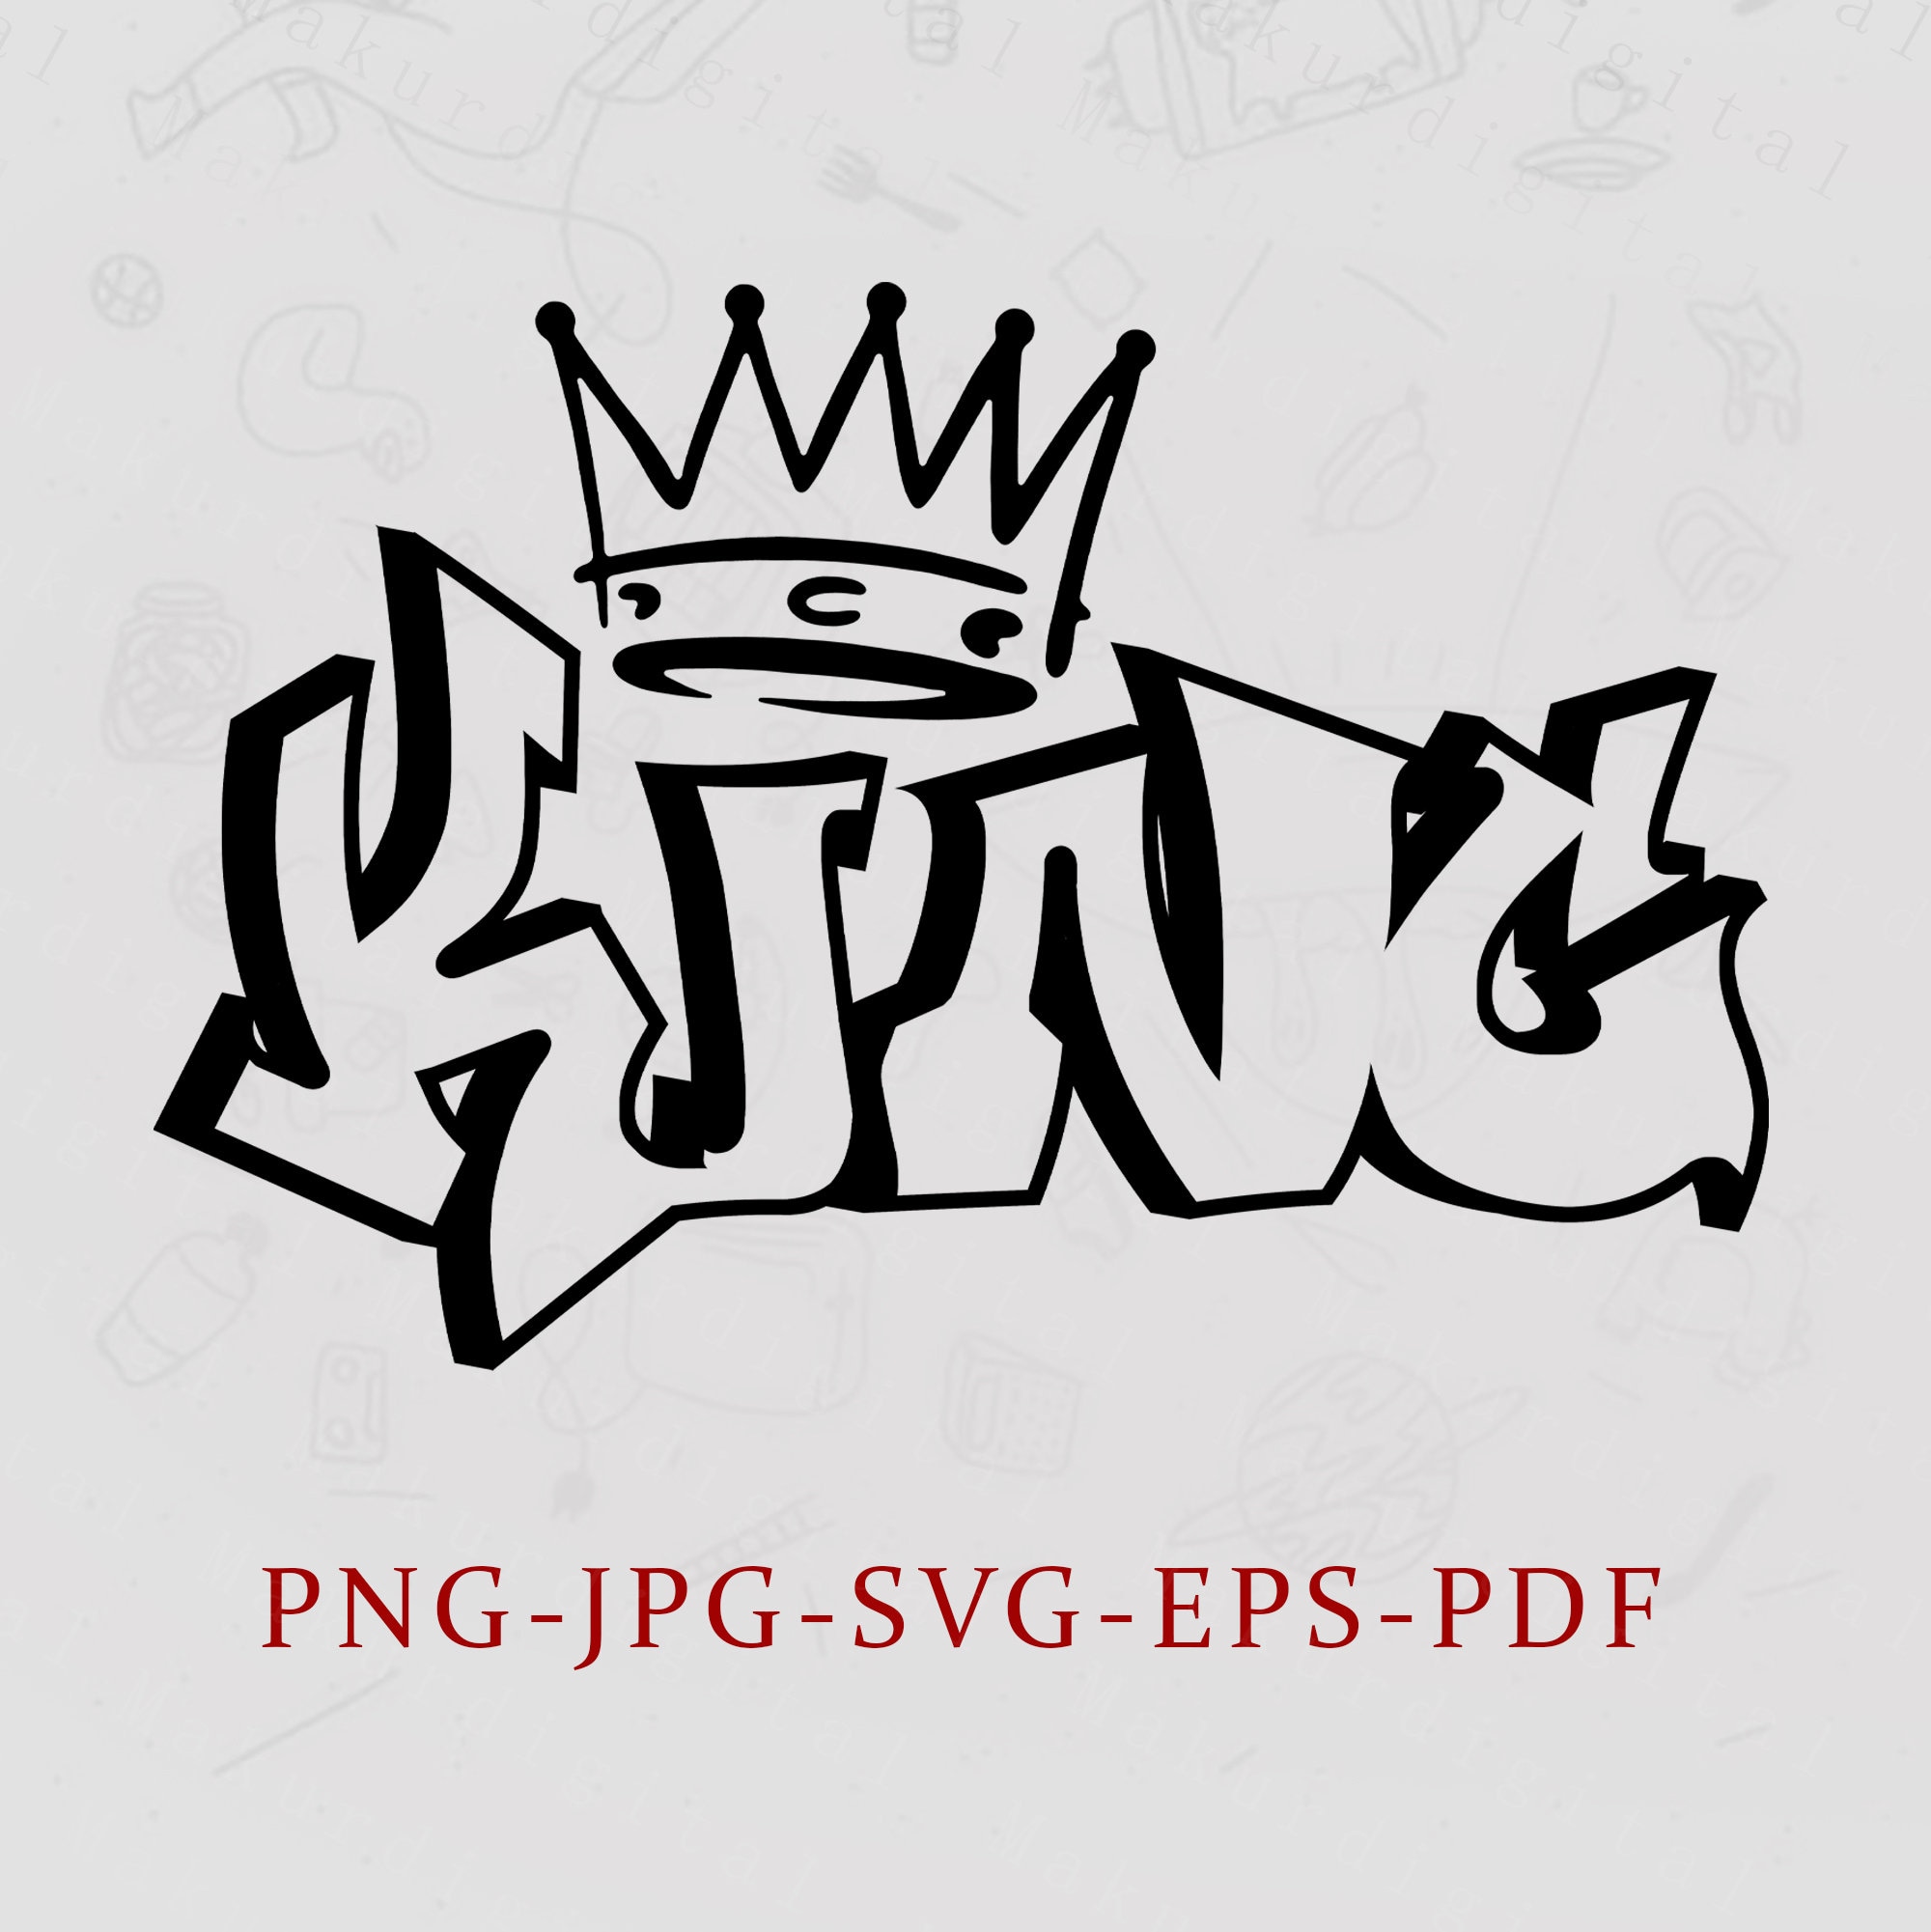 King Dice  Cartoon styles, Graffiti drawing, King tattoos